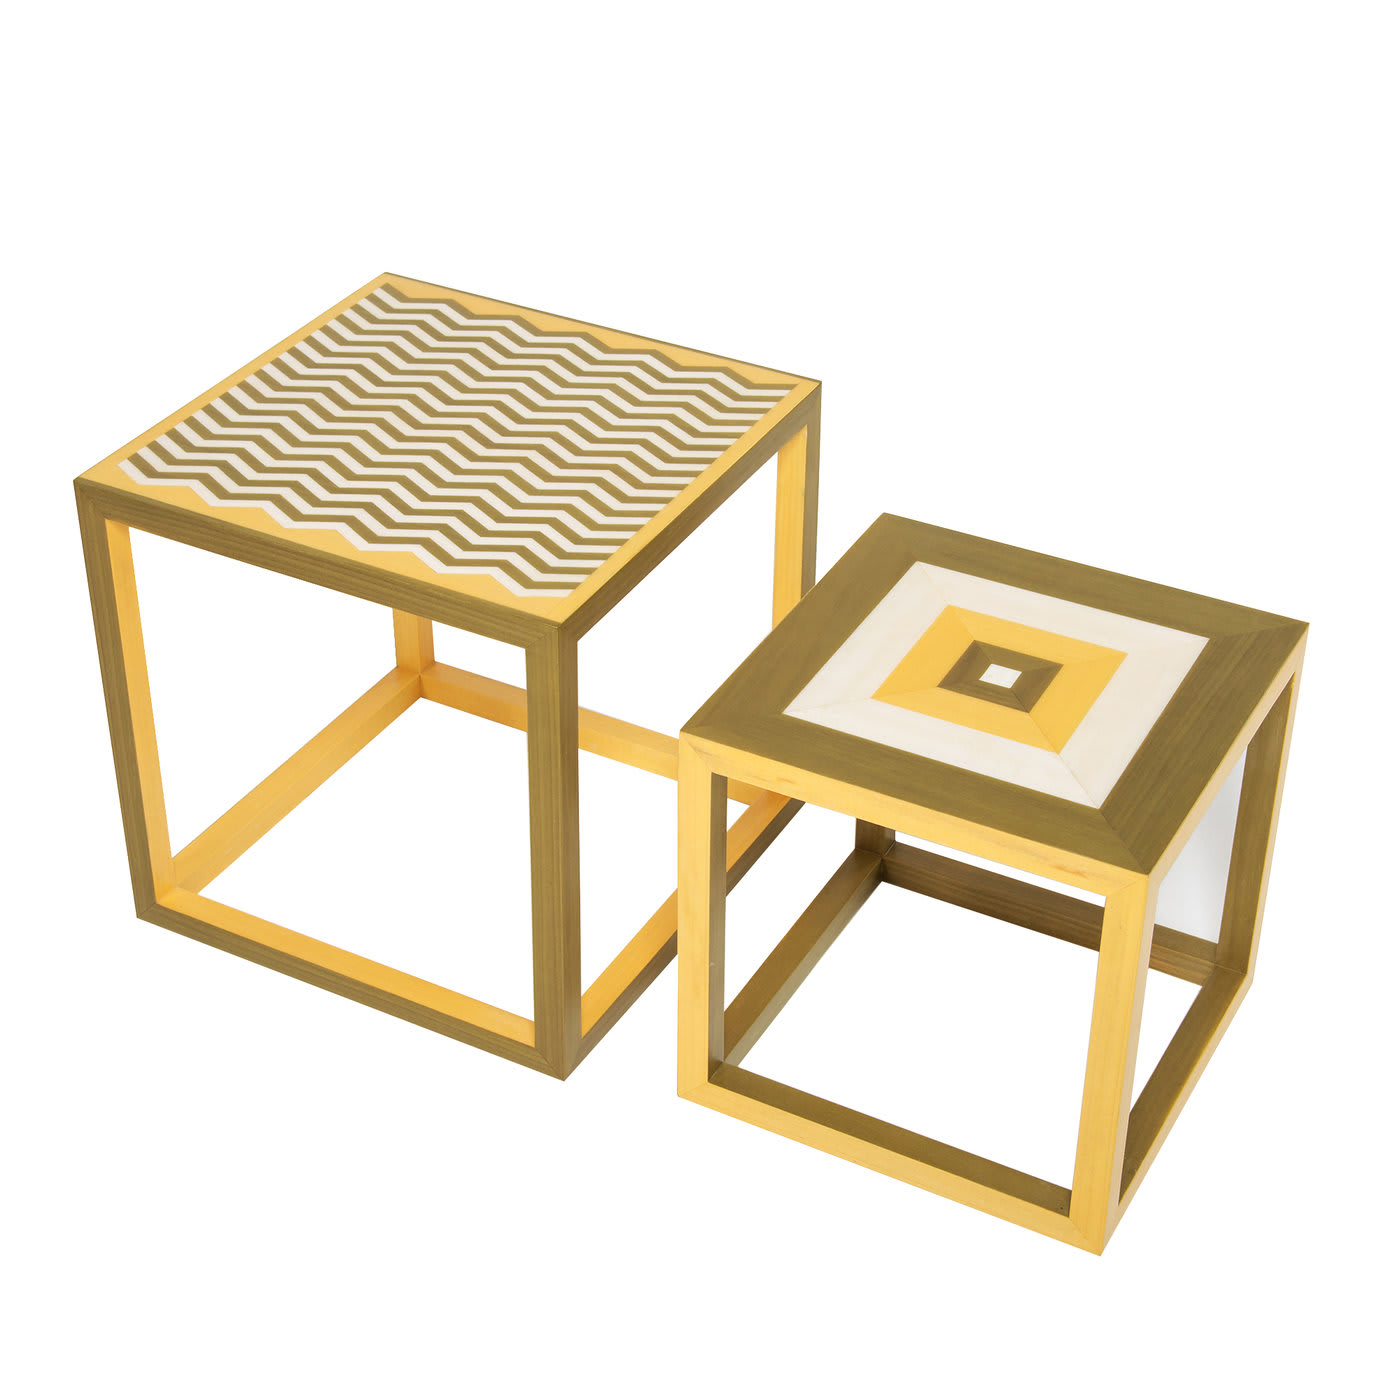 Partenope Yellow Squares Set of 2 Nesting Tables - Architetti Artigiani Anonimi